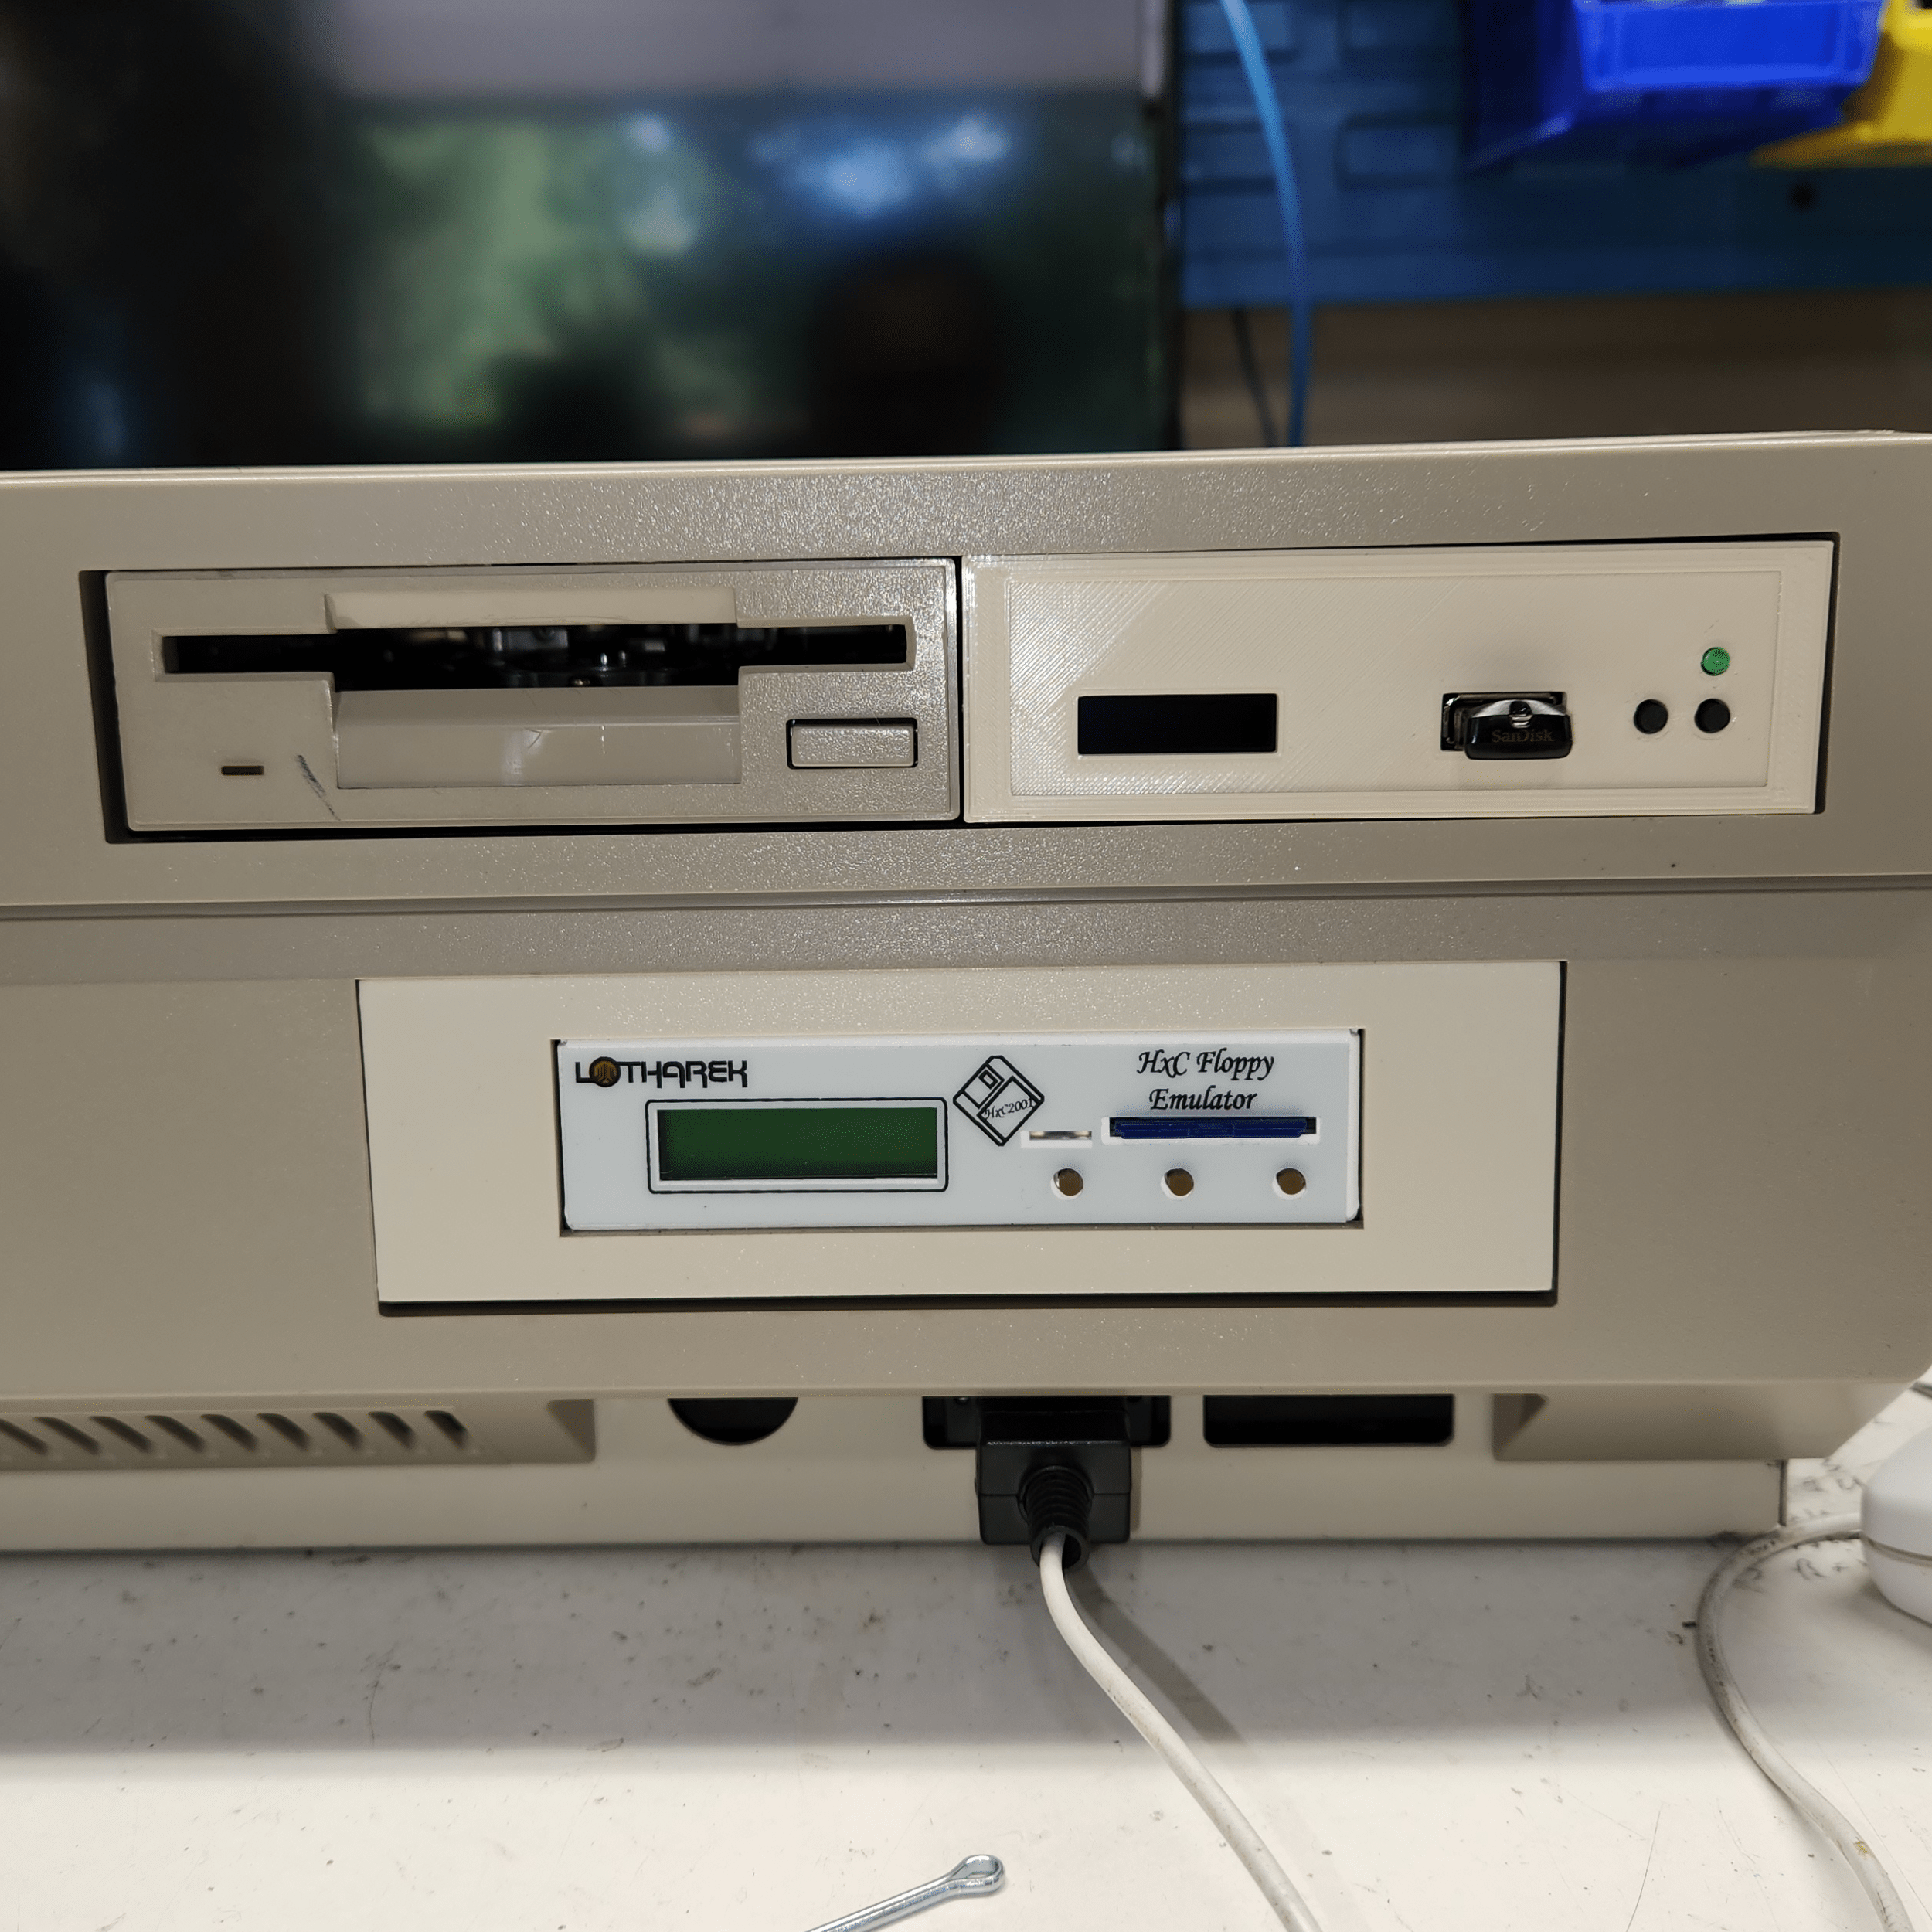 3D printer Gotek case installed into an Amiga 2000